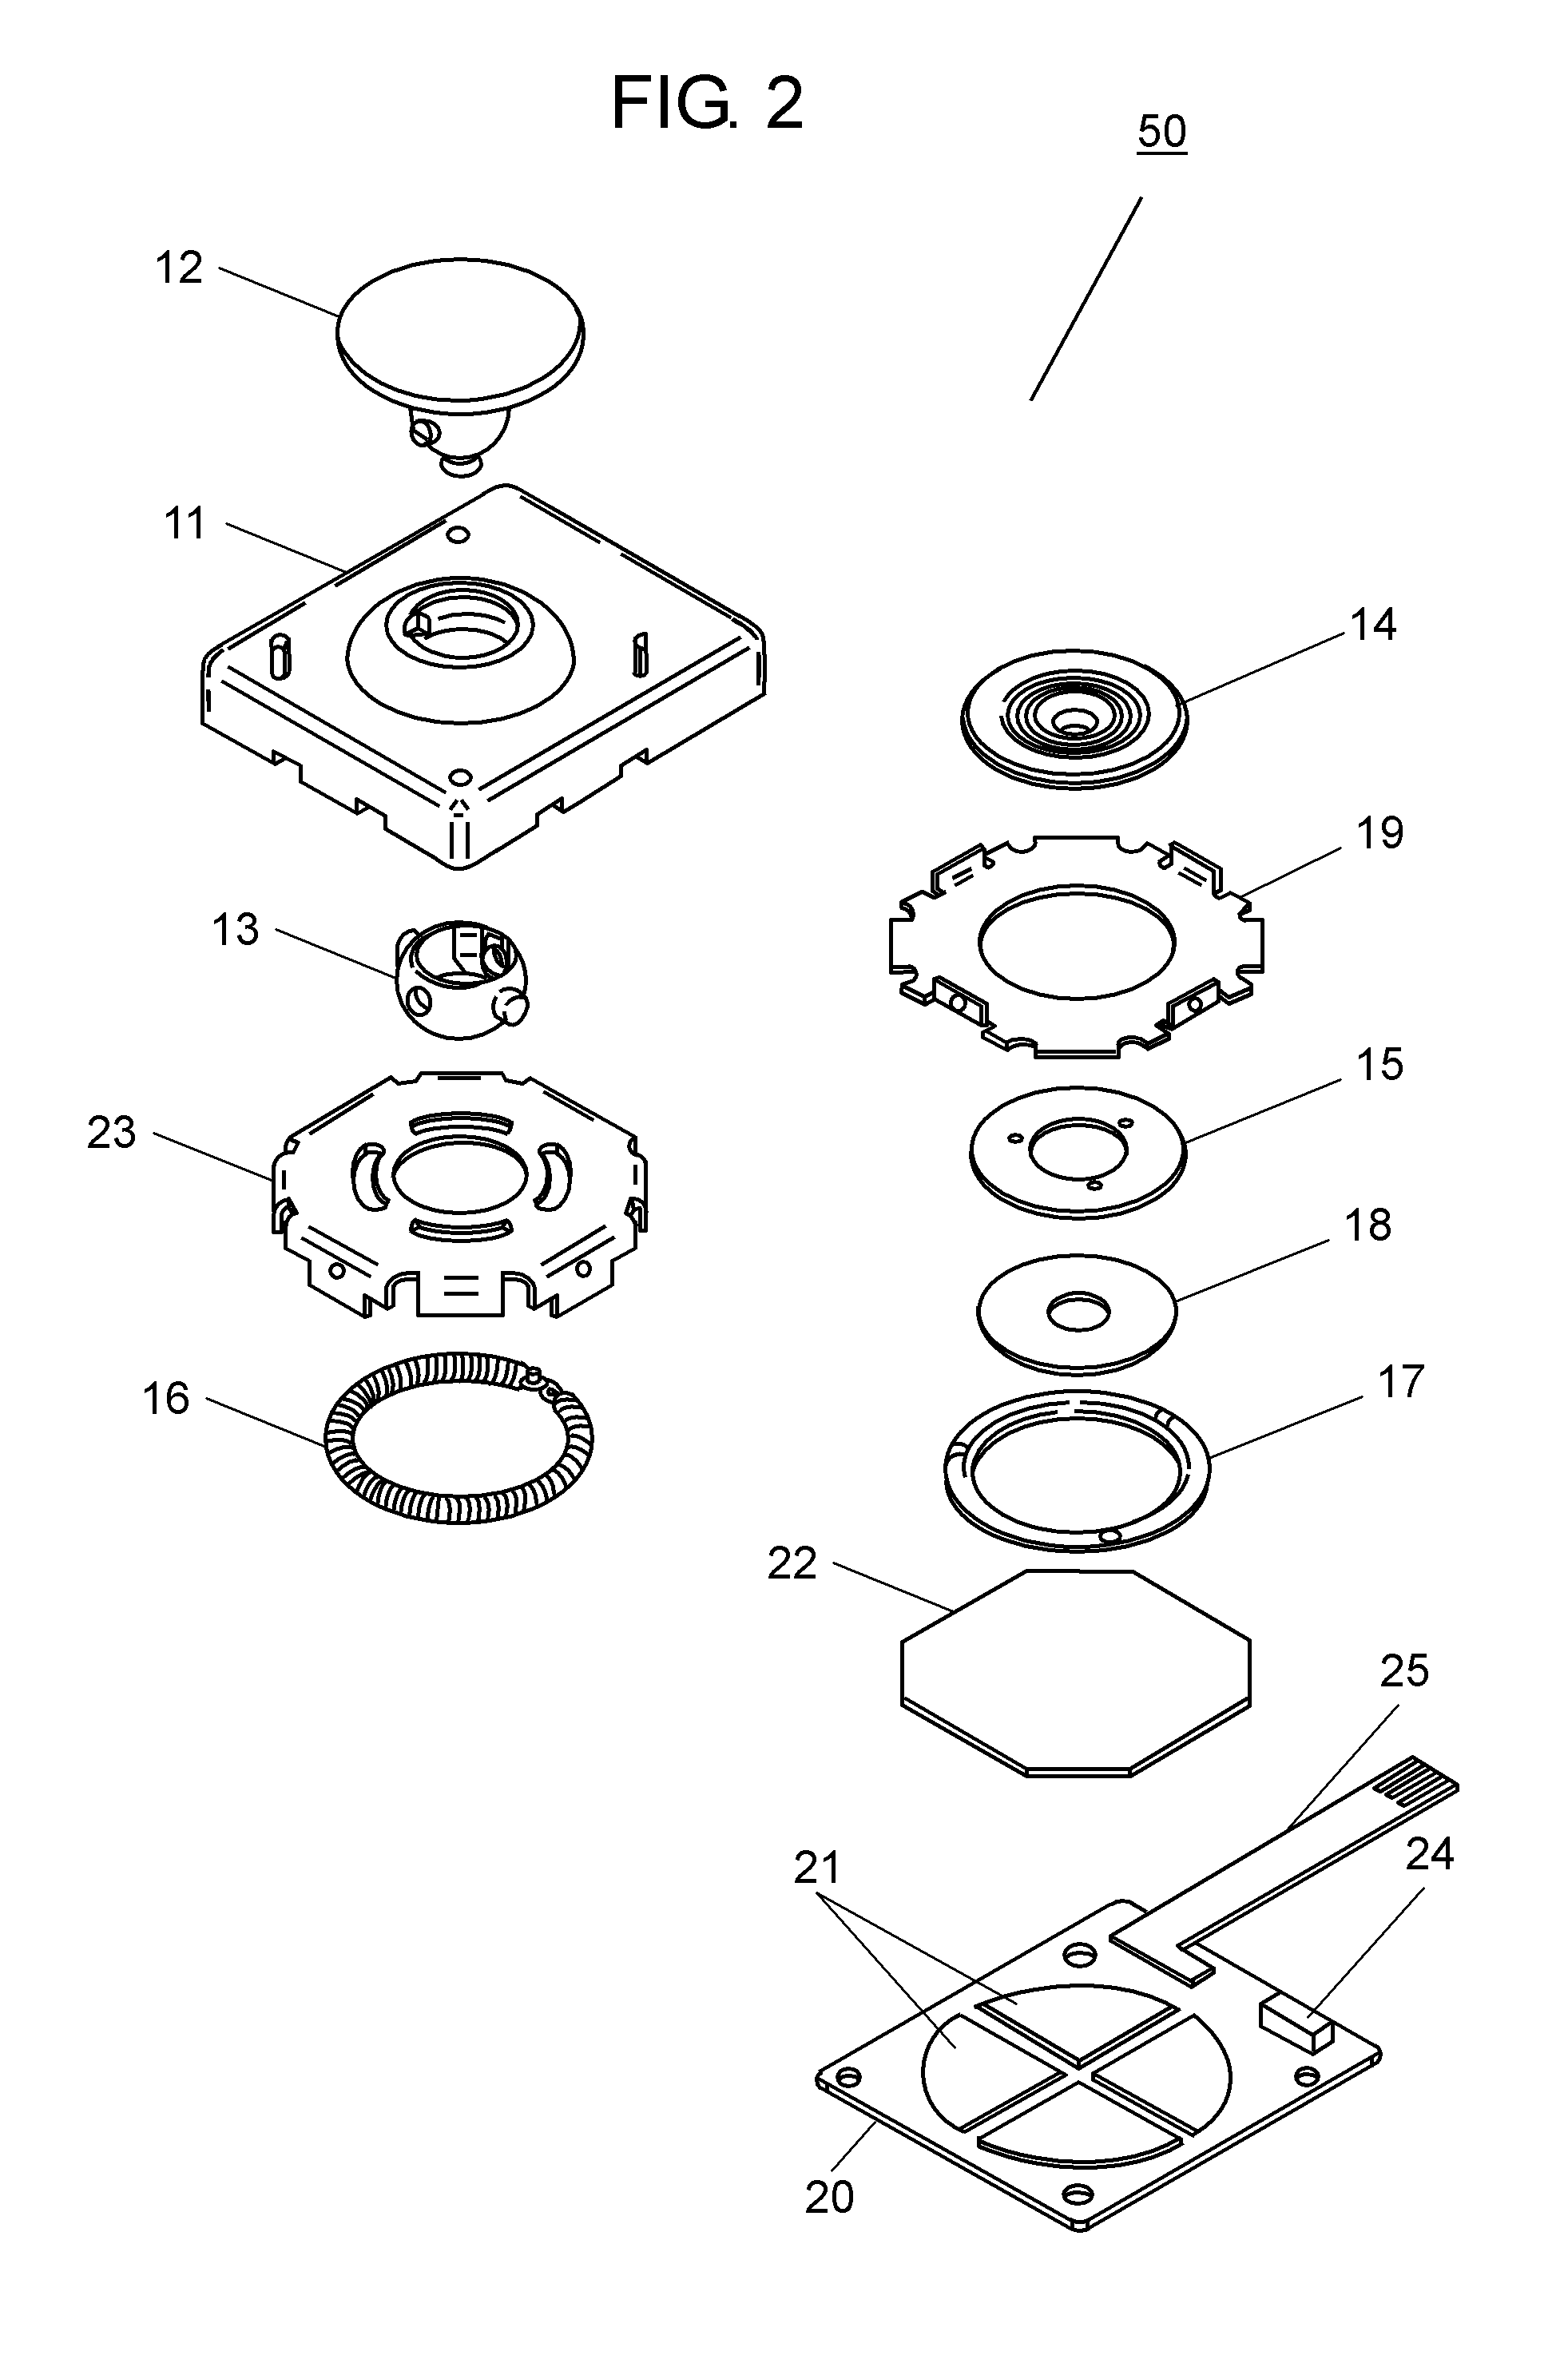 Multi-directional input device